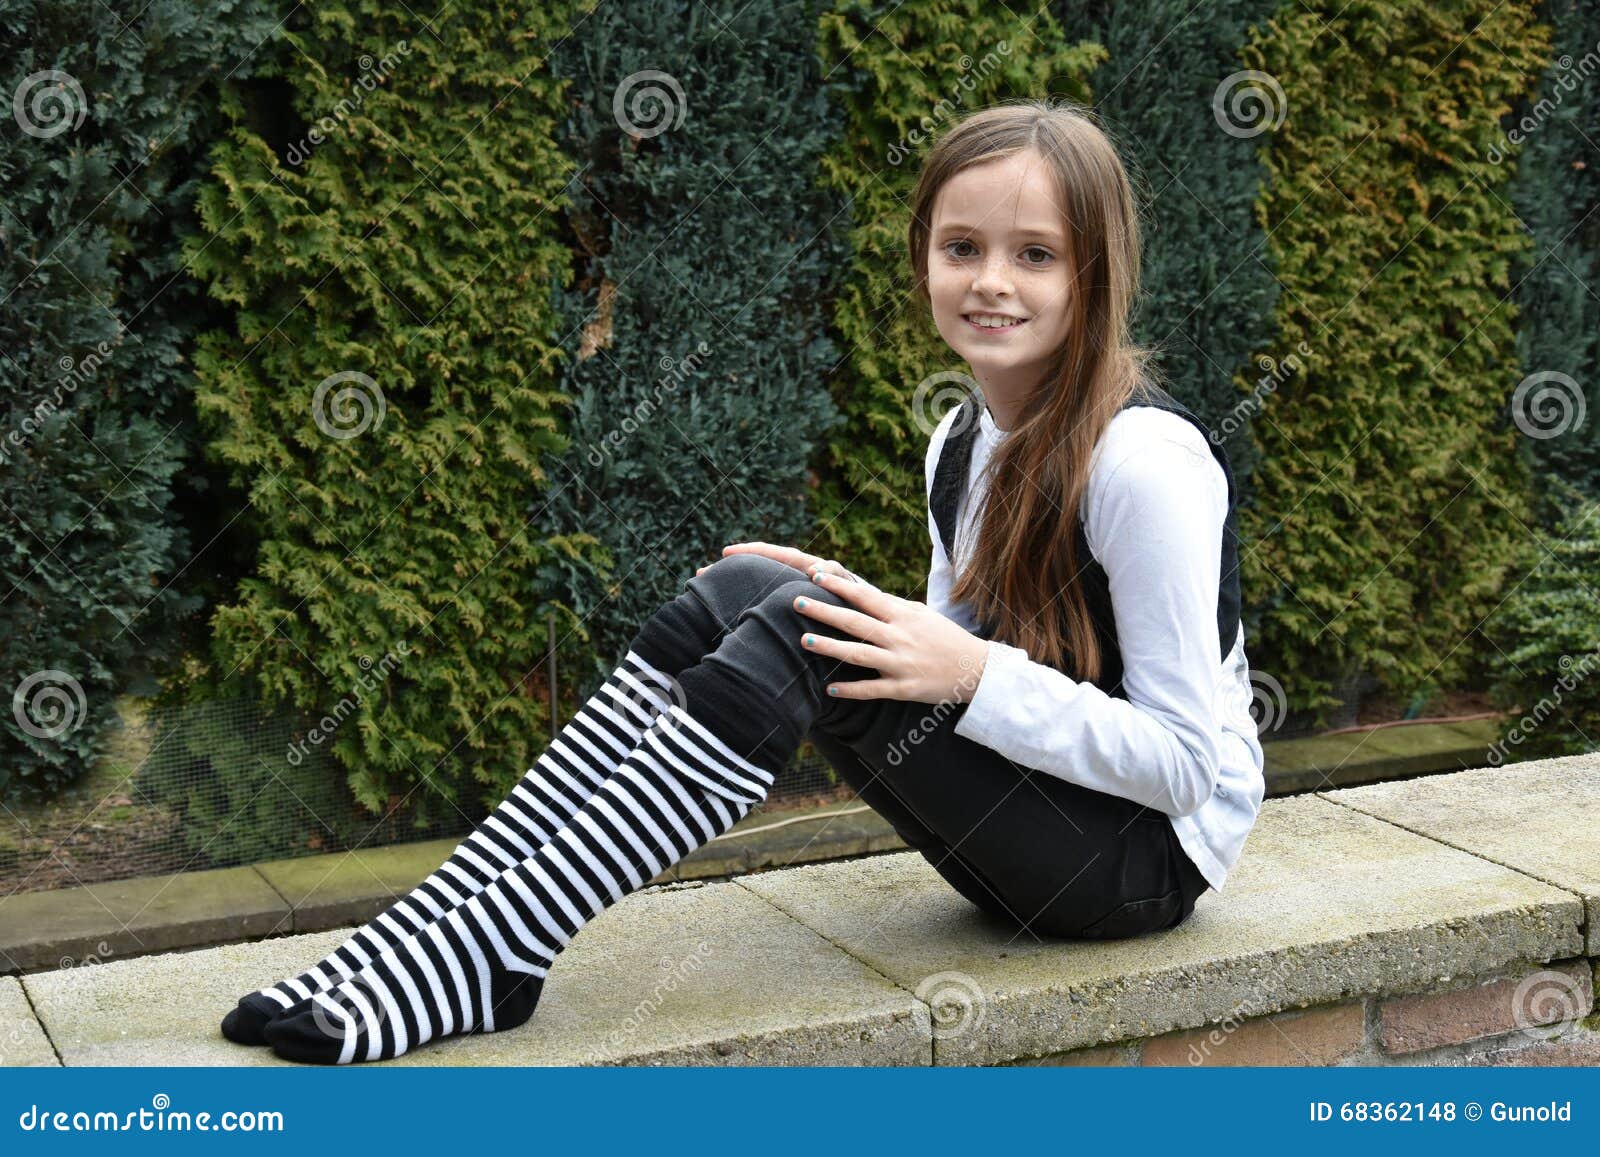 Teens With White Socks 83